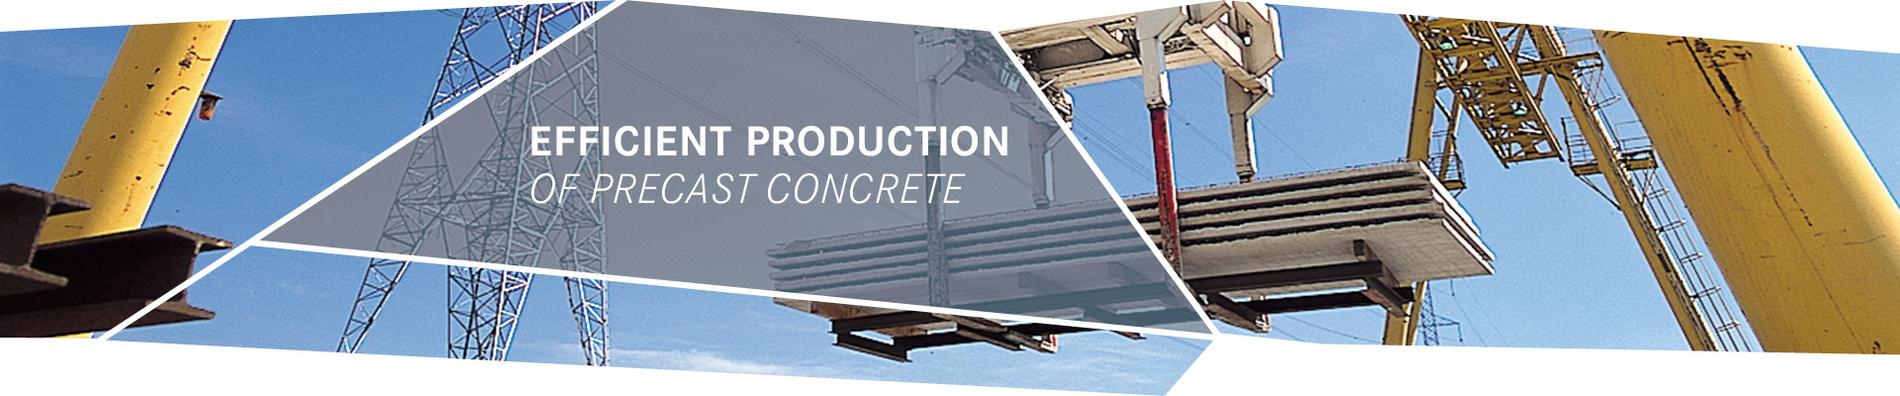 Precast concrete technology